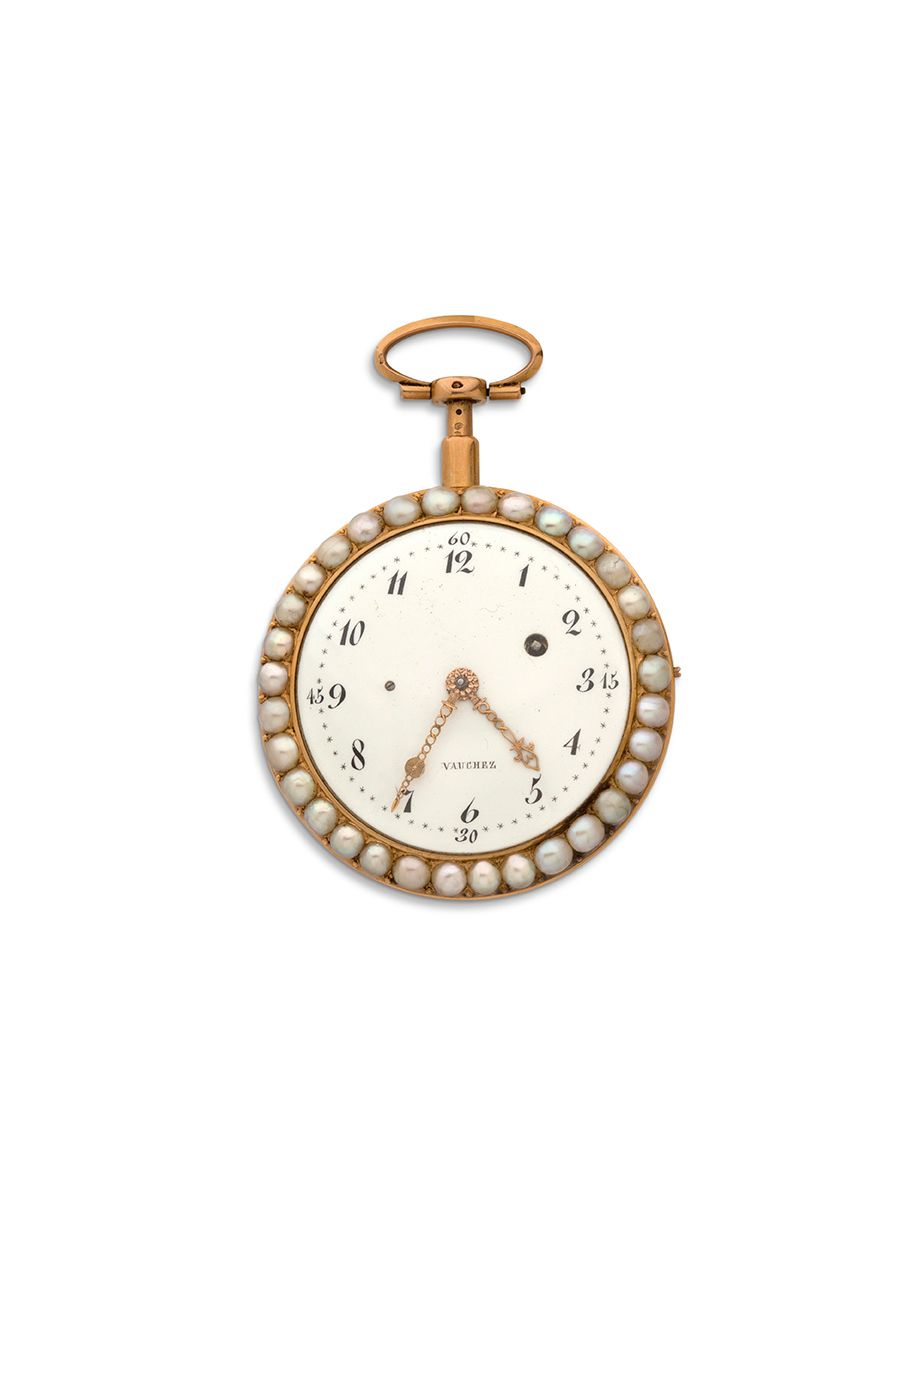 VAUCHEZ, Paris 
Gold alarm watch with double entourage of half pearls



Hinged &hellip;